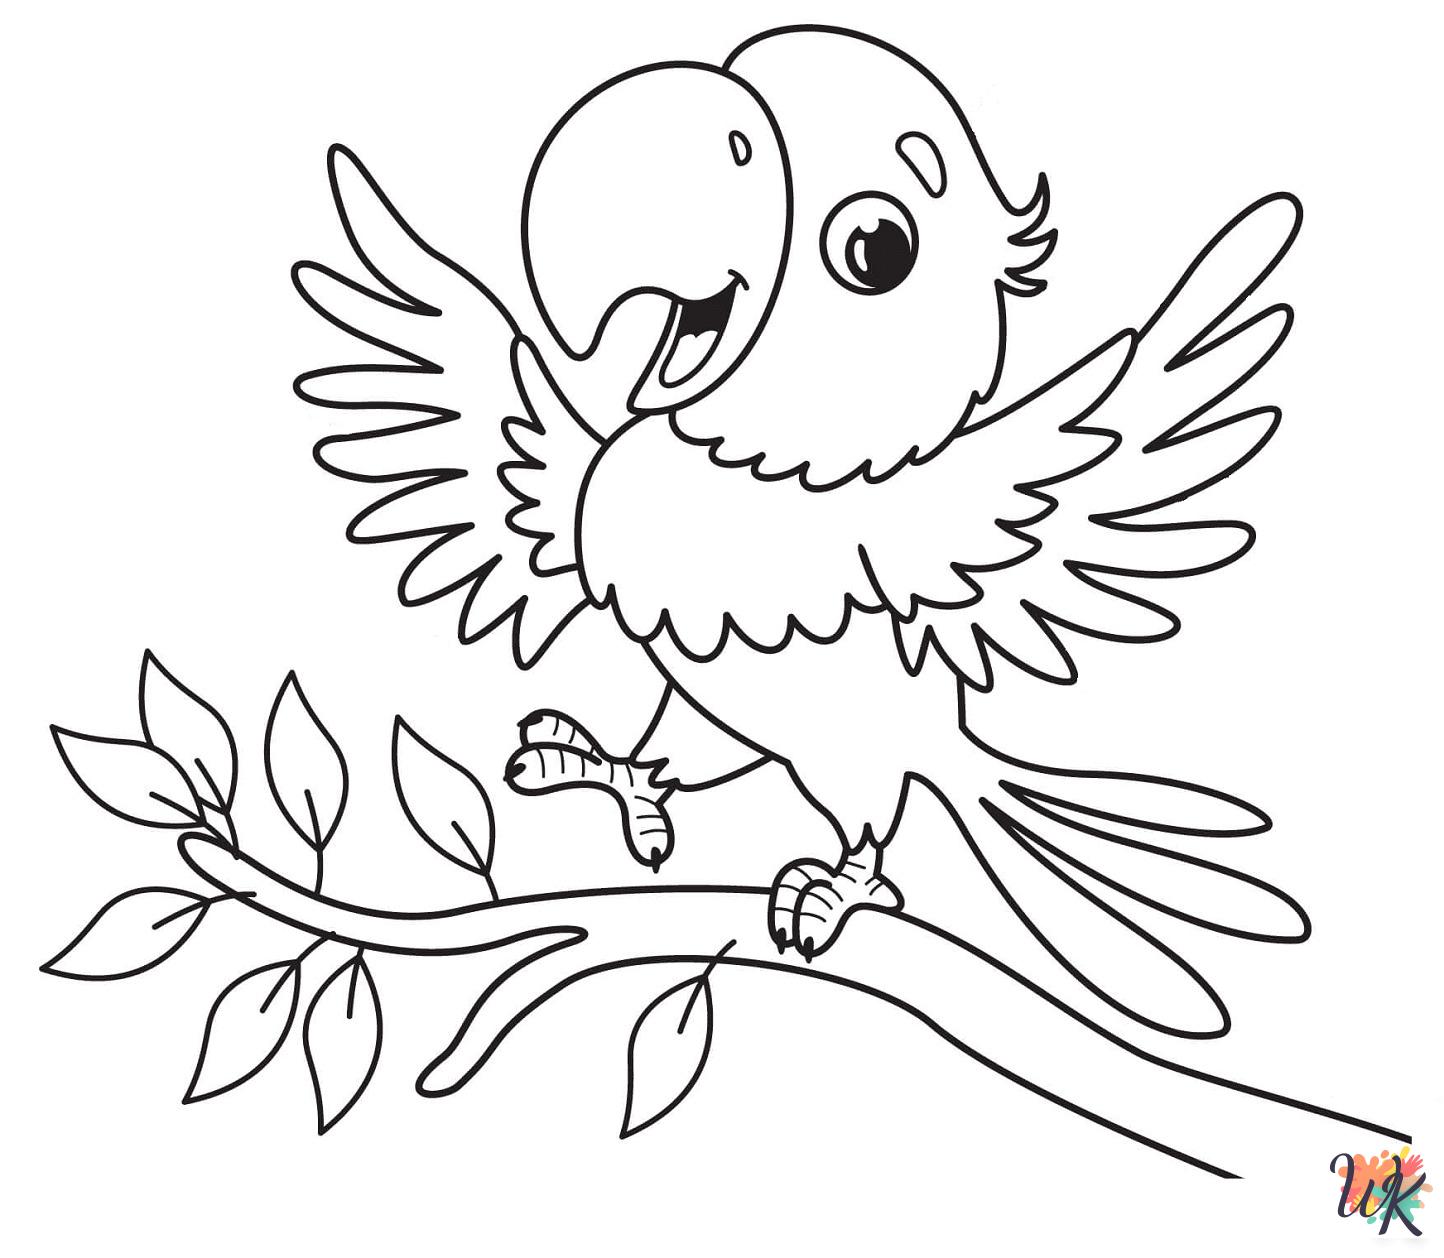 Parrot decorations coloring pages